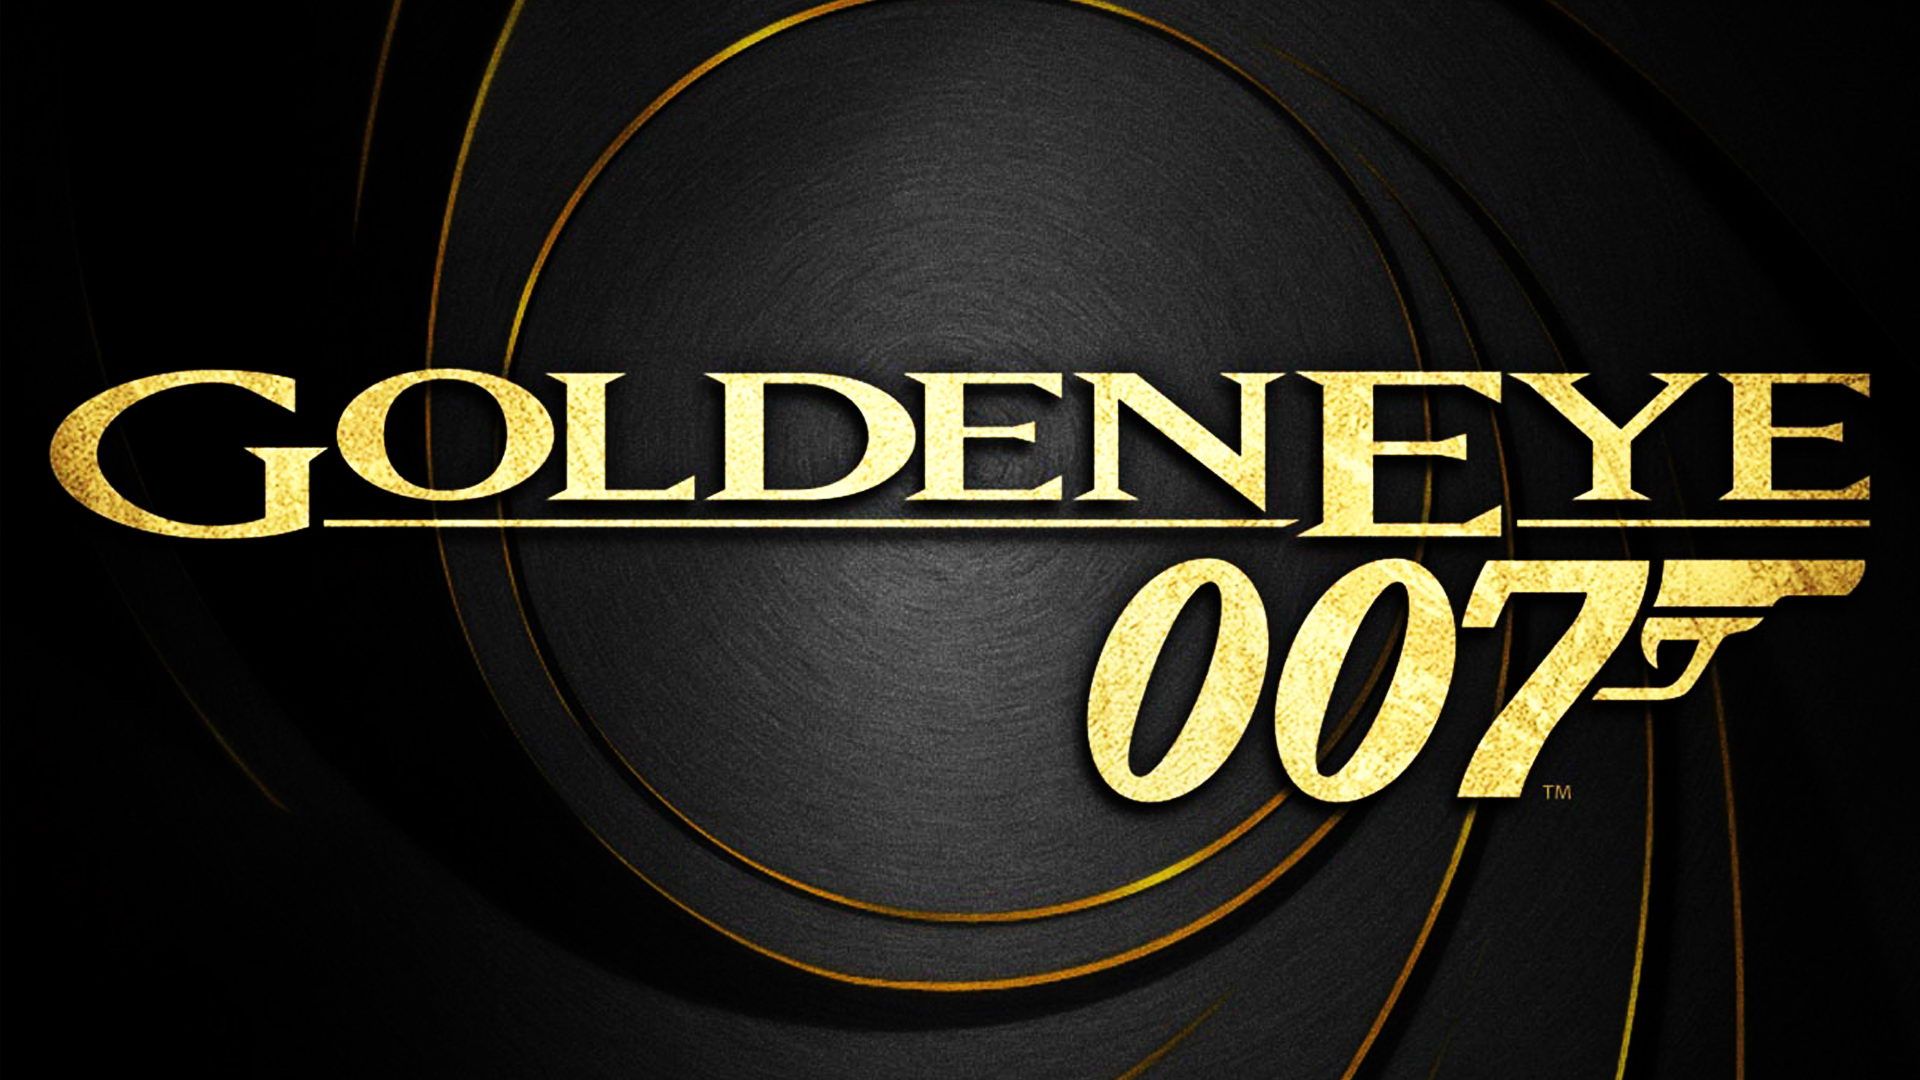 GoldenEye 007 Wallpapers | Just Good Vibe